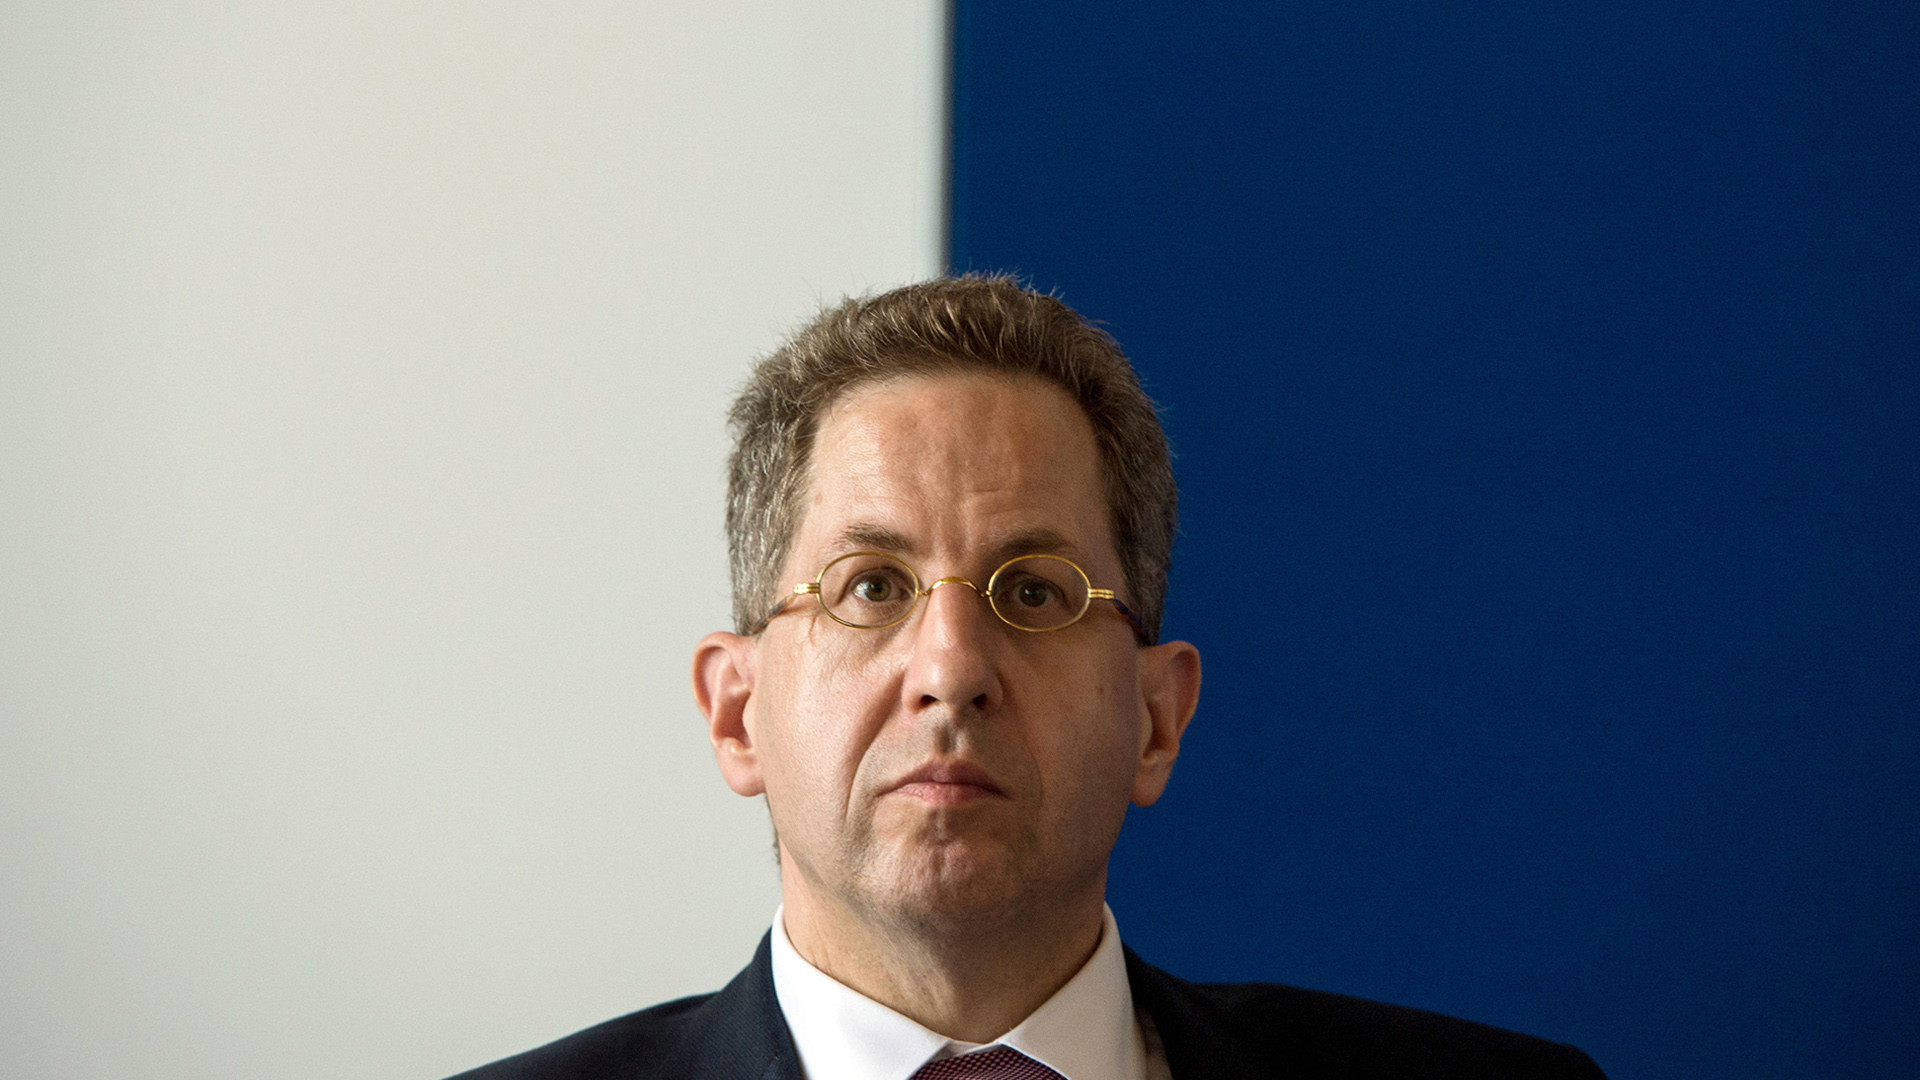 Hans-Georg Maaßen | dpa